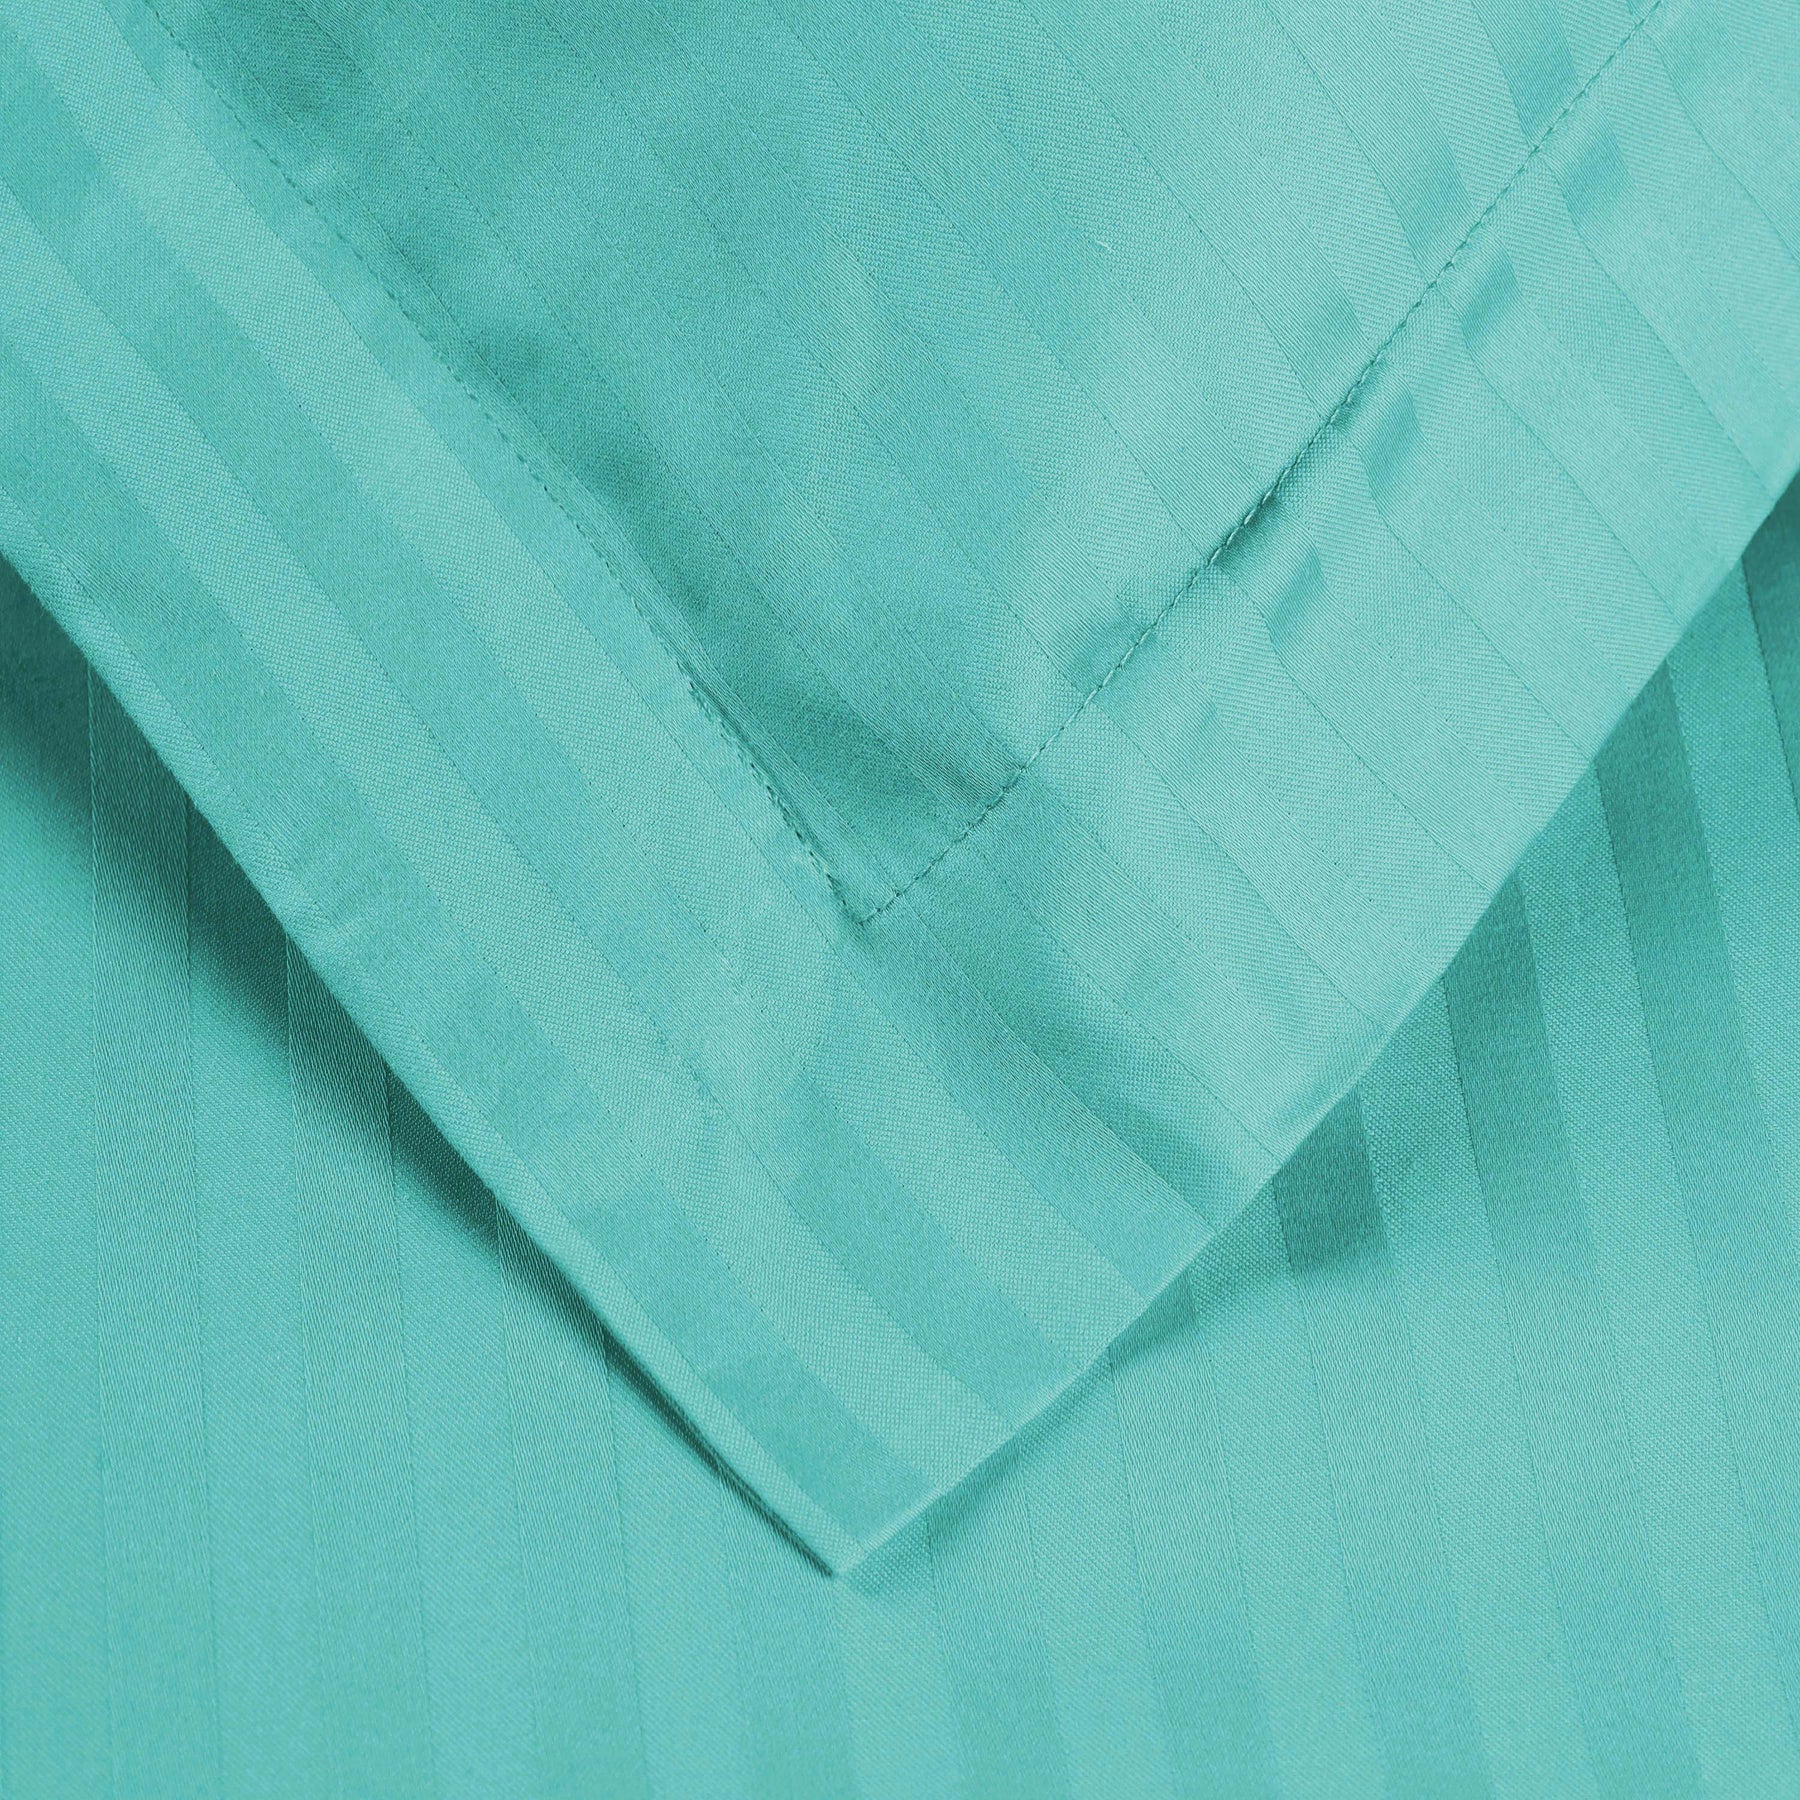 Superior Premium 600 Thread Count Egyptian Cotton Solid Duvet Cover Set -  Teal